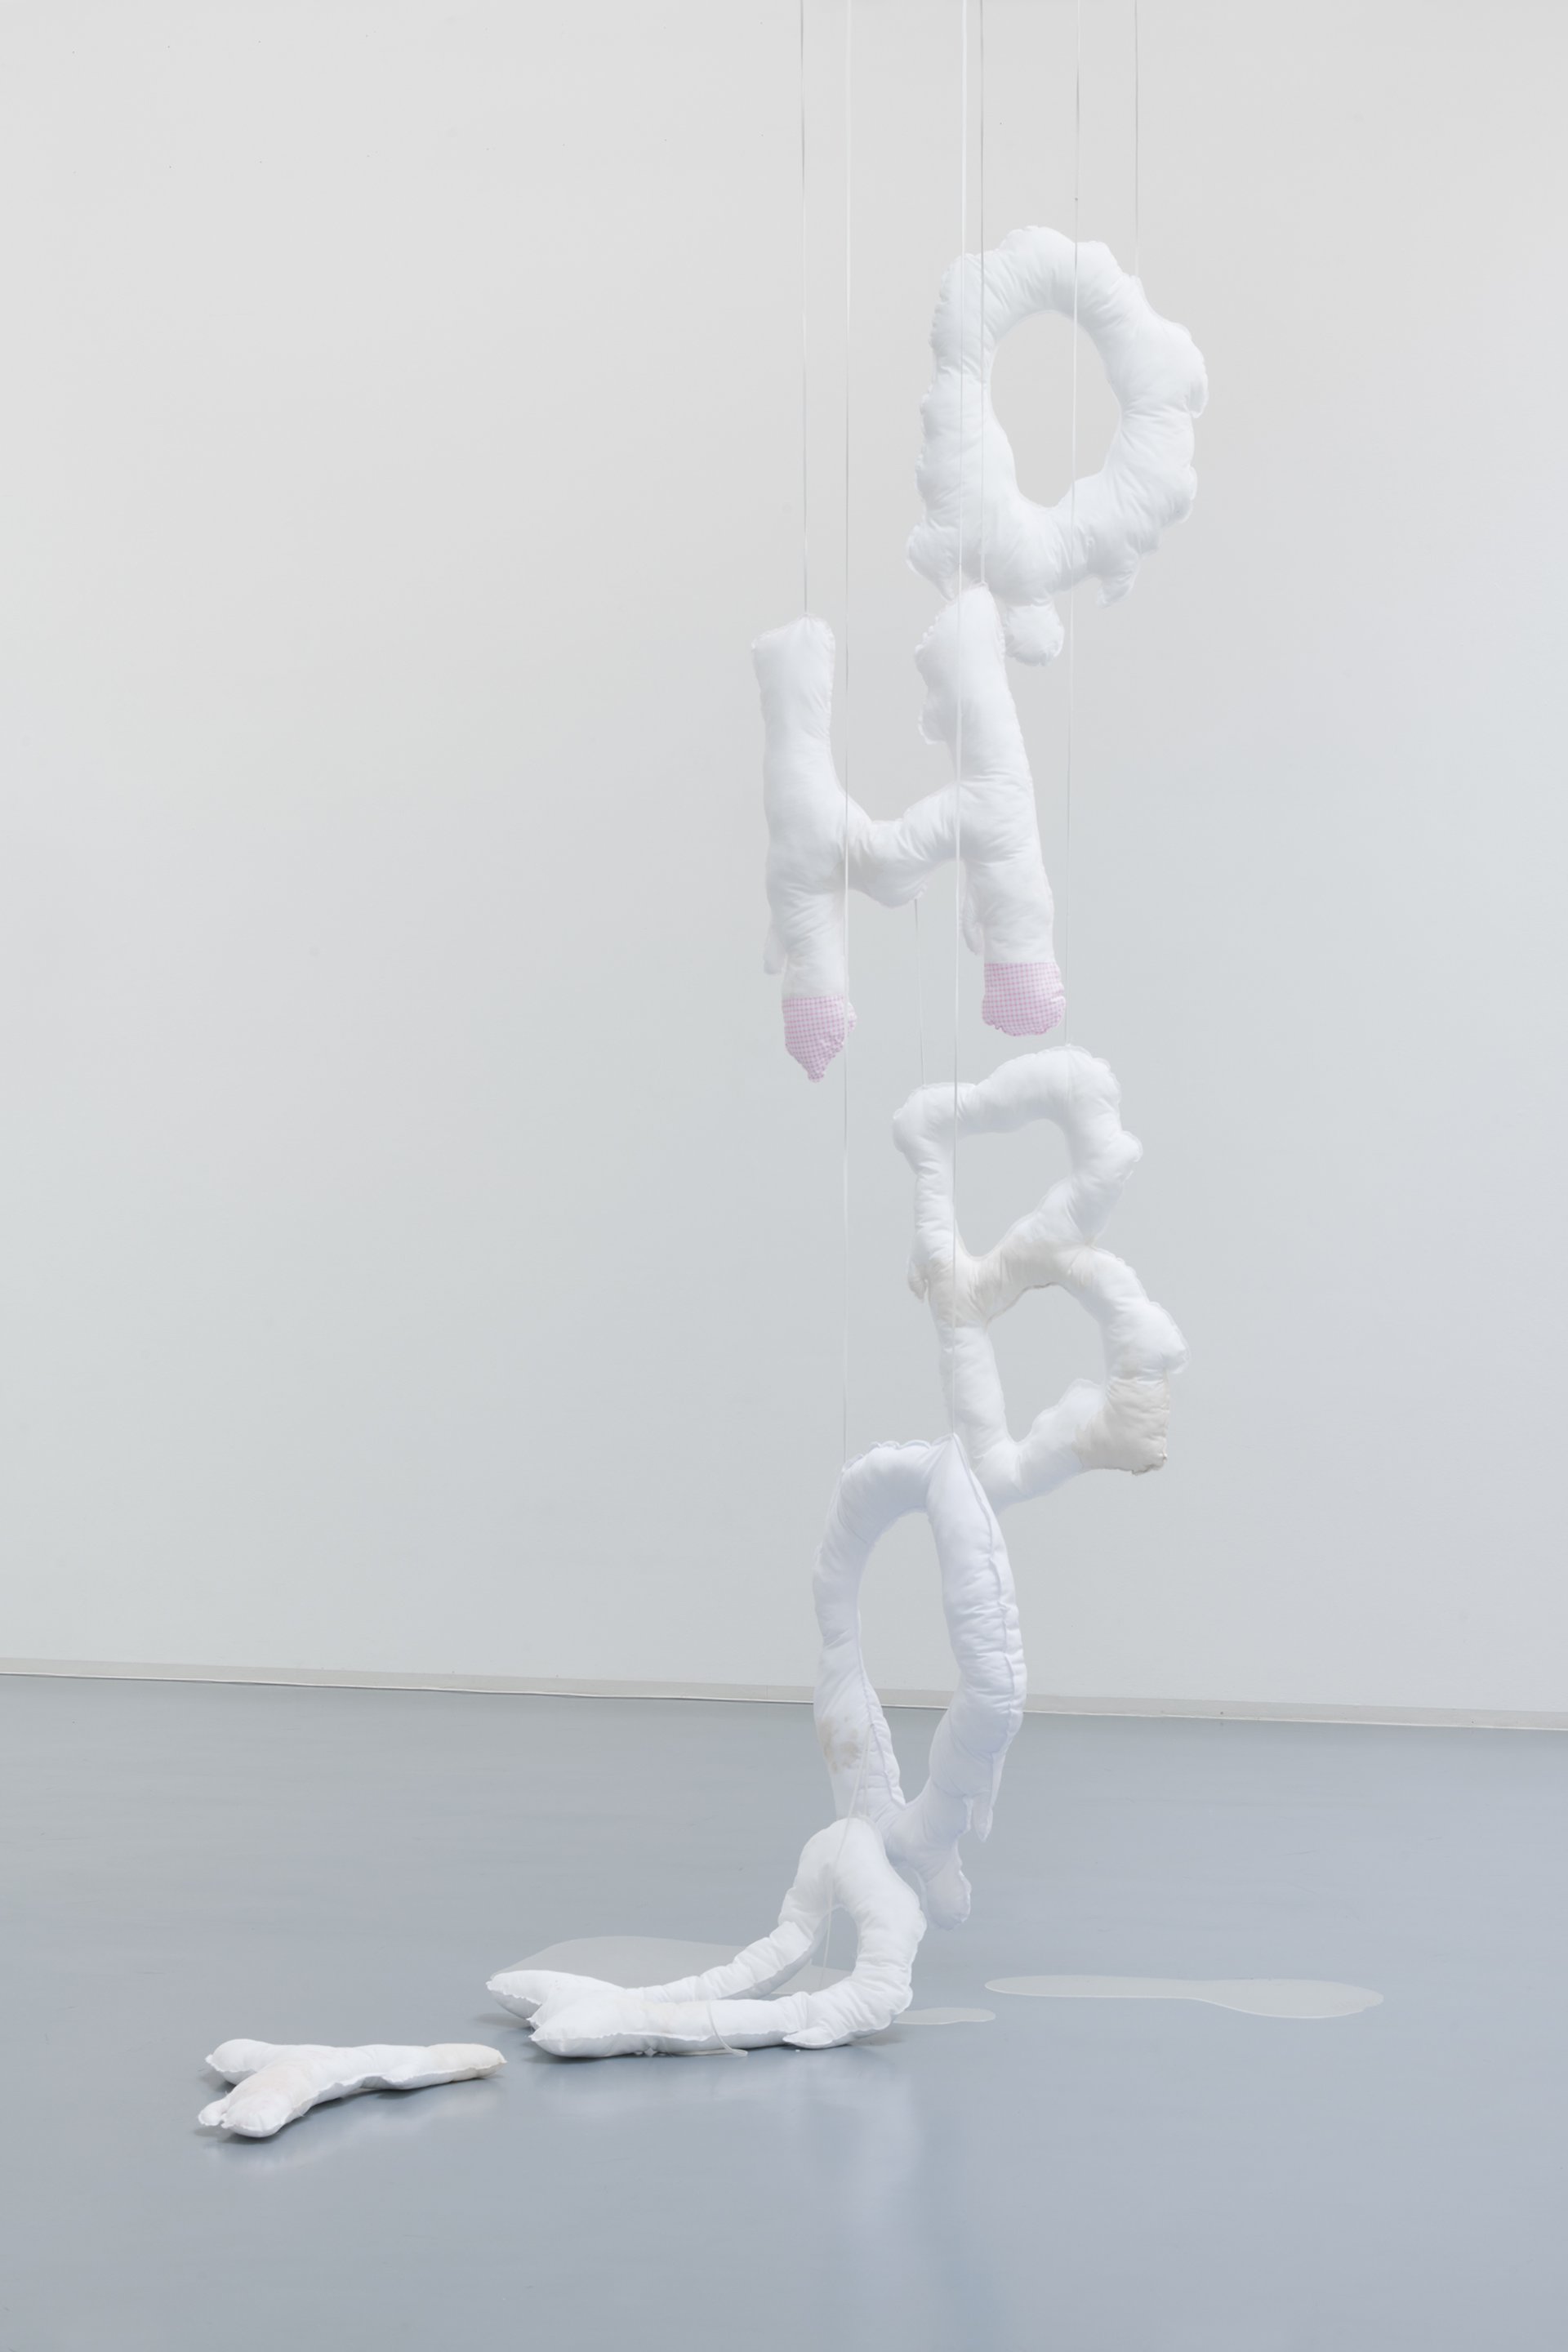 Franca Scholz, installation view, 2020, Bonner Kunstverein, courtesy of the artist. Photo: Mareike Tocha